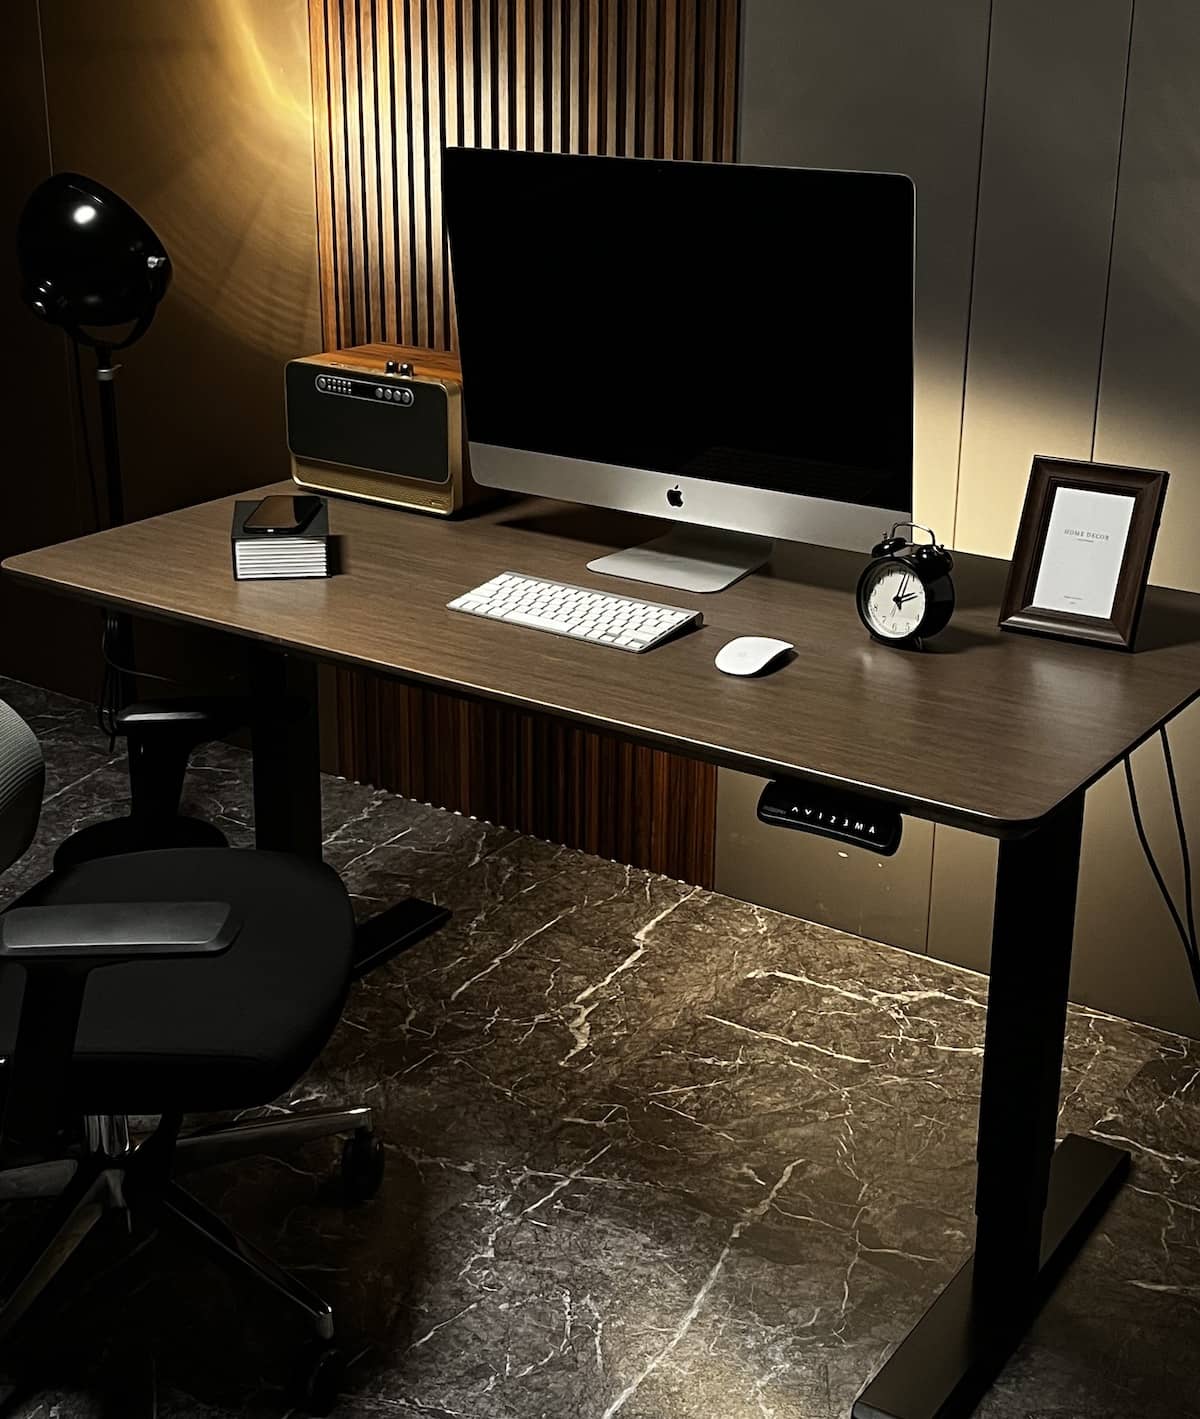 E5 pro standing desk by Flexispot